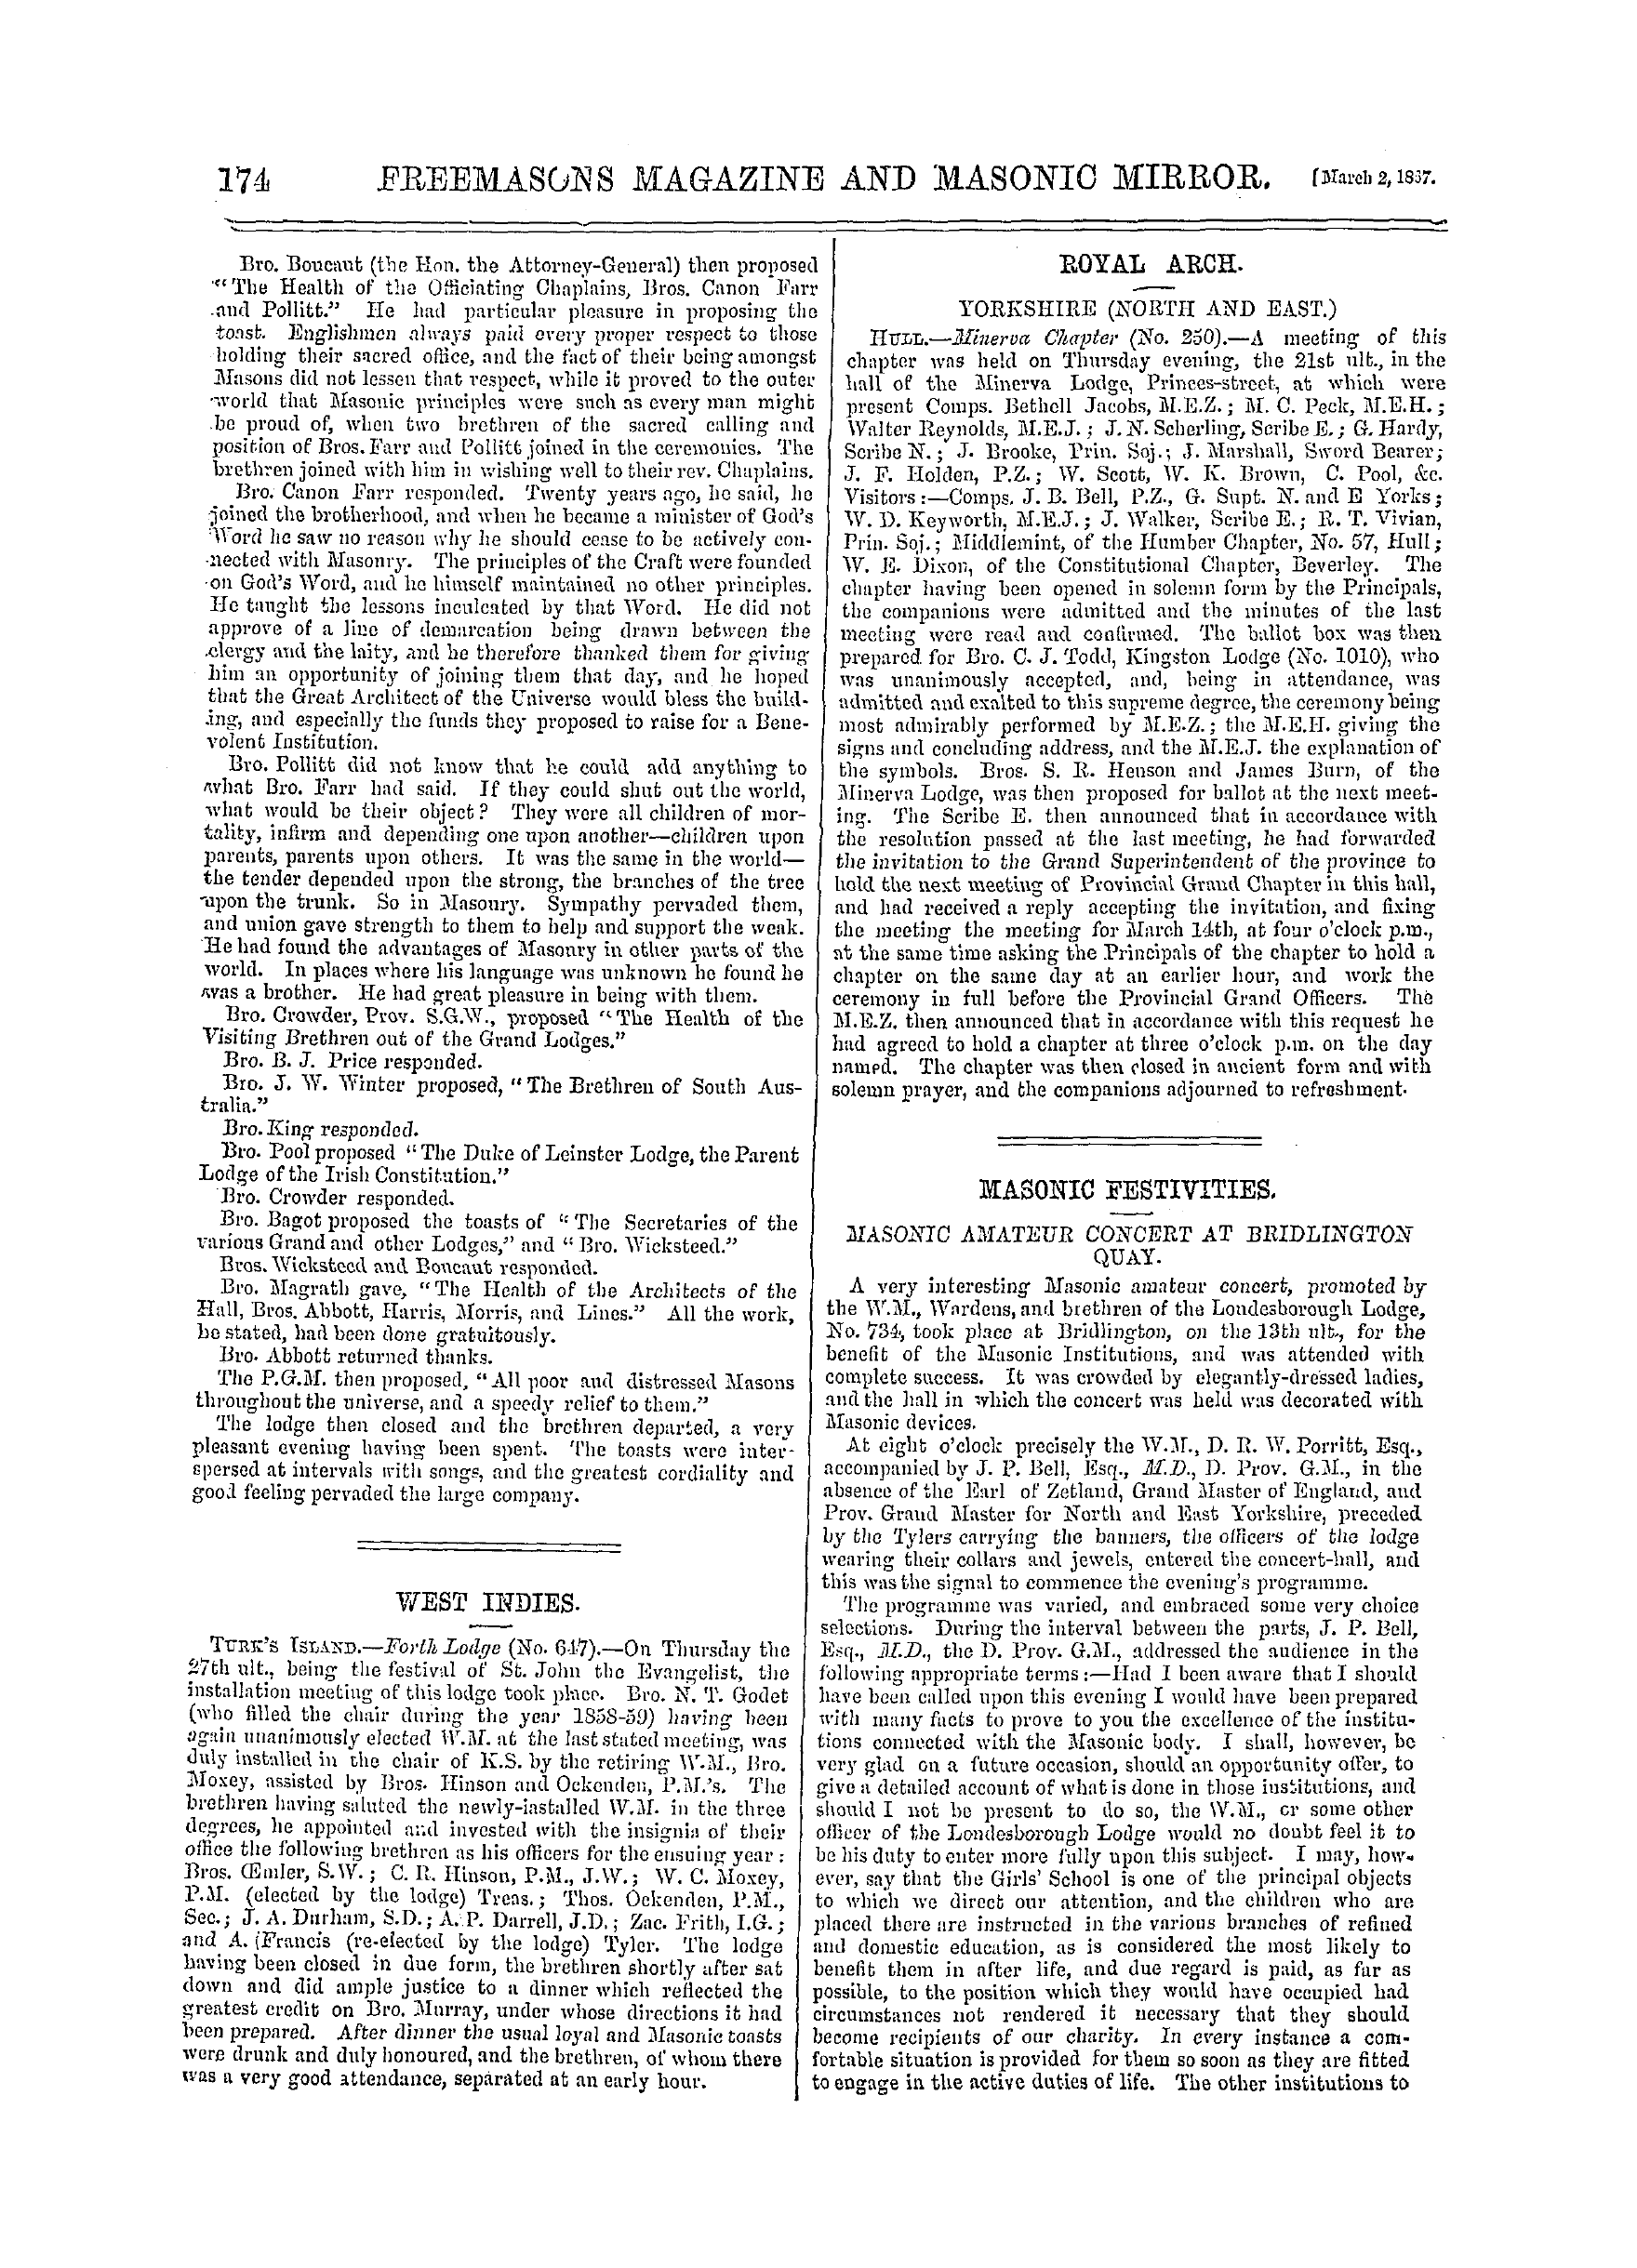 The Freemasons' Monthly Magazine: 1867-03-02 - Royal Arch.